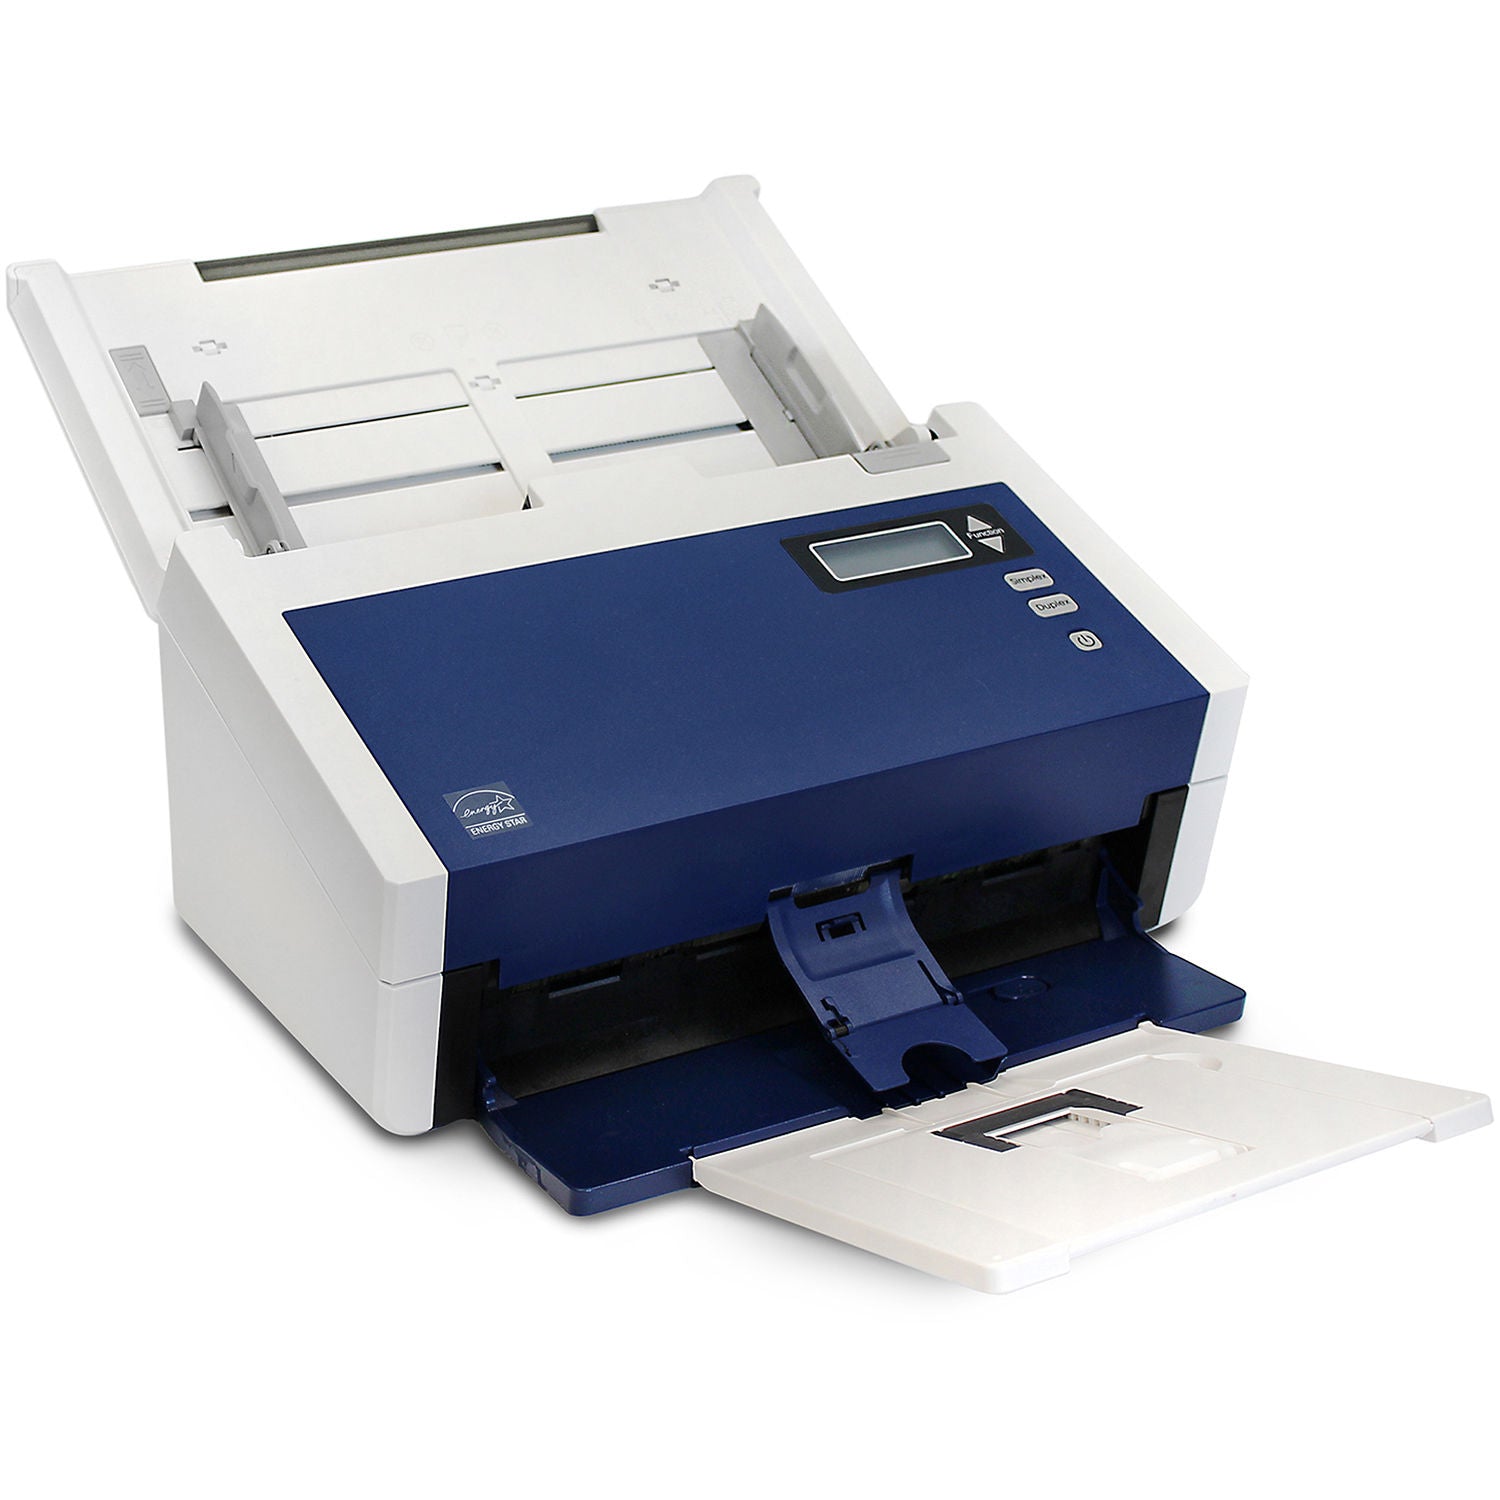 Xerox DocuMate 6480 Duplex Document Scanner For PC, Automatic Document Feeder - XDM6480-U